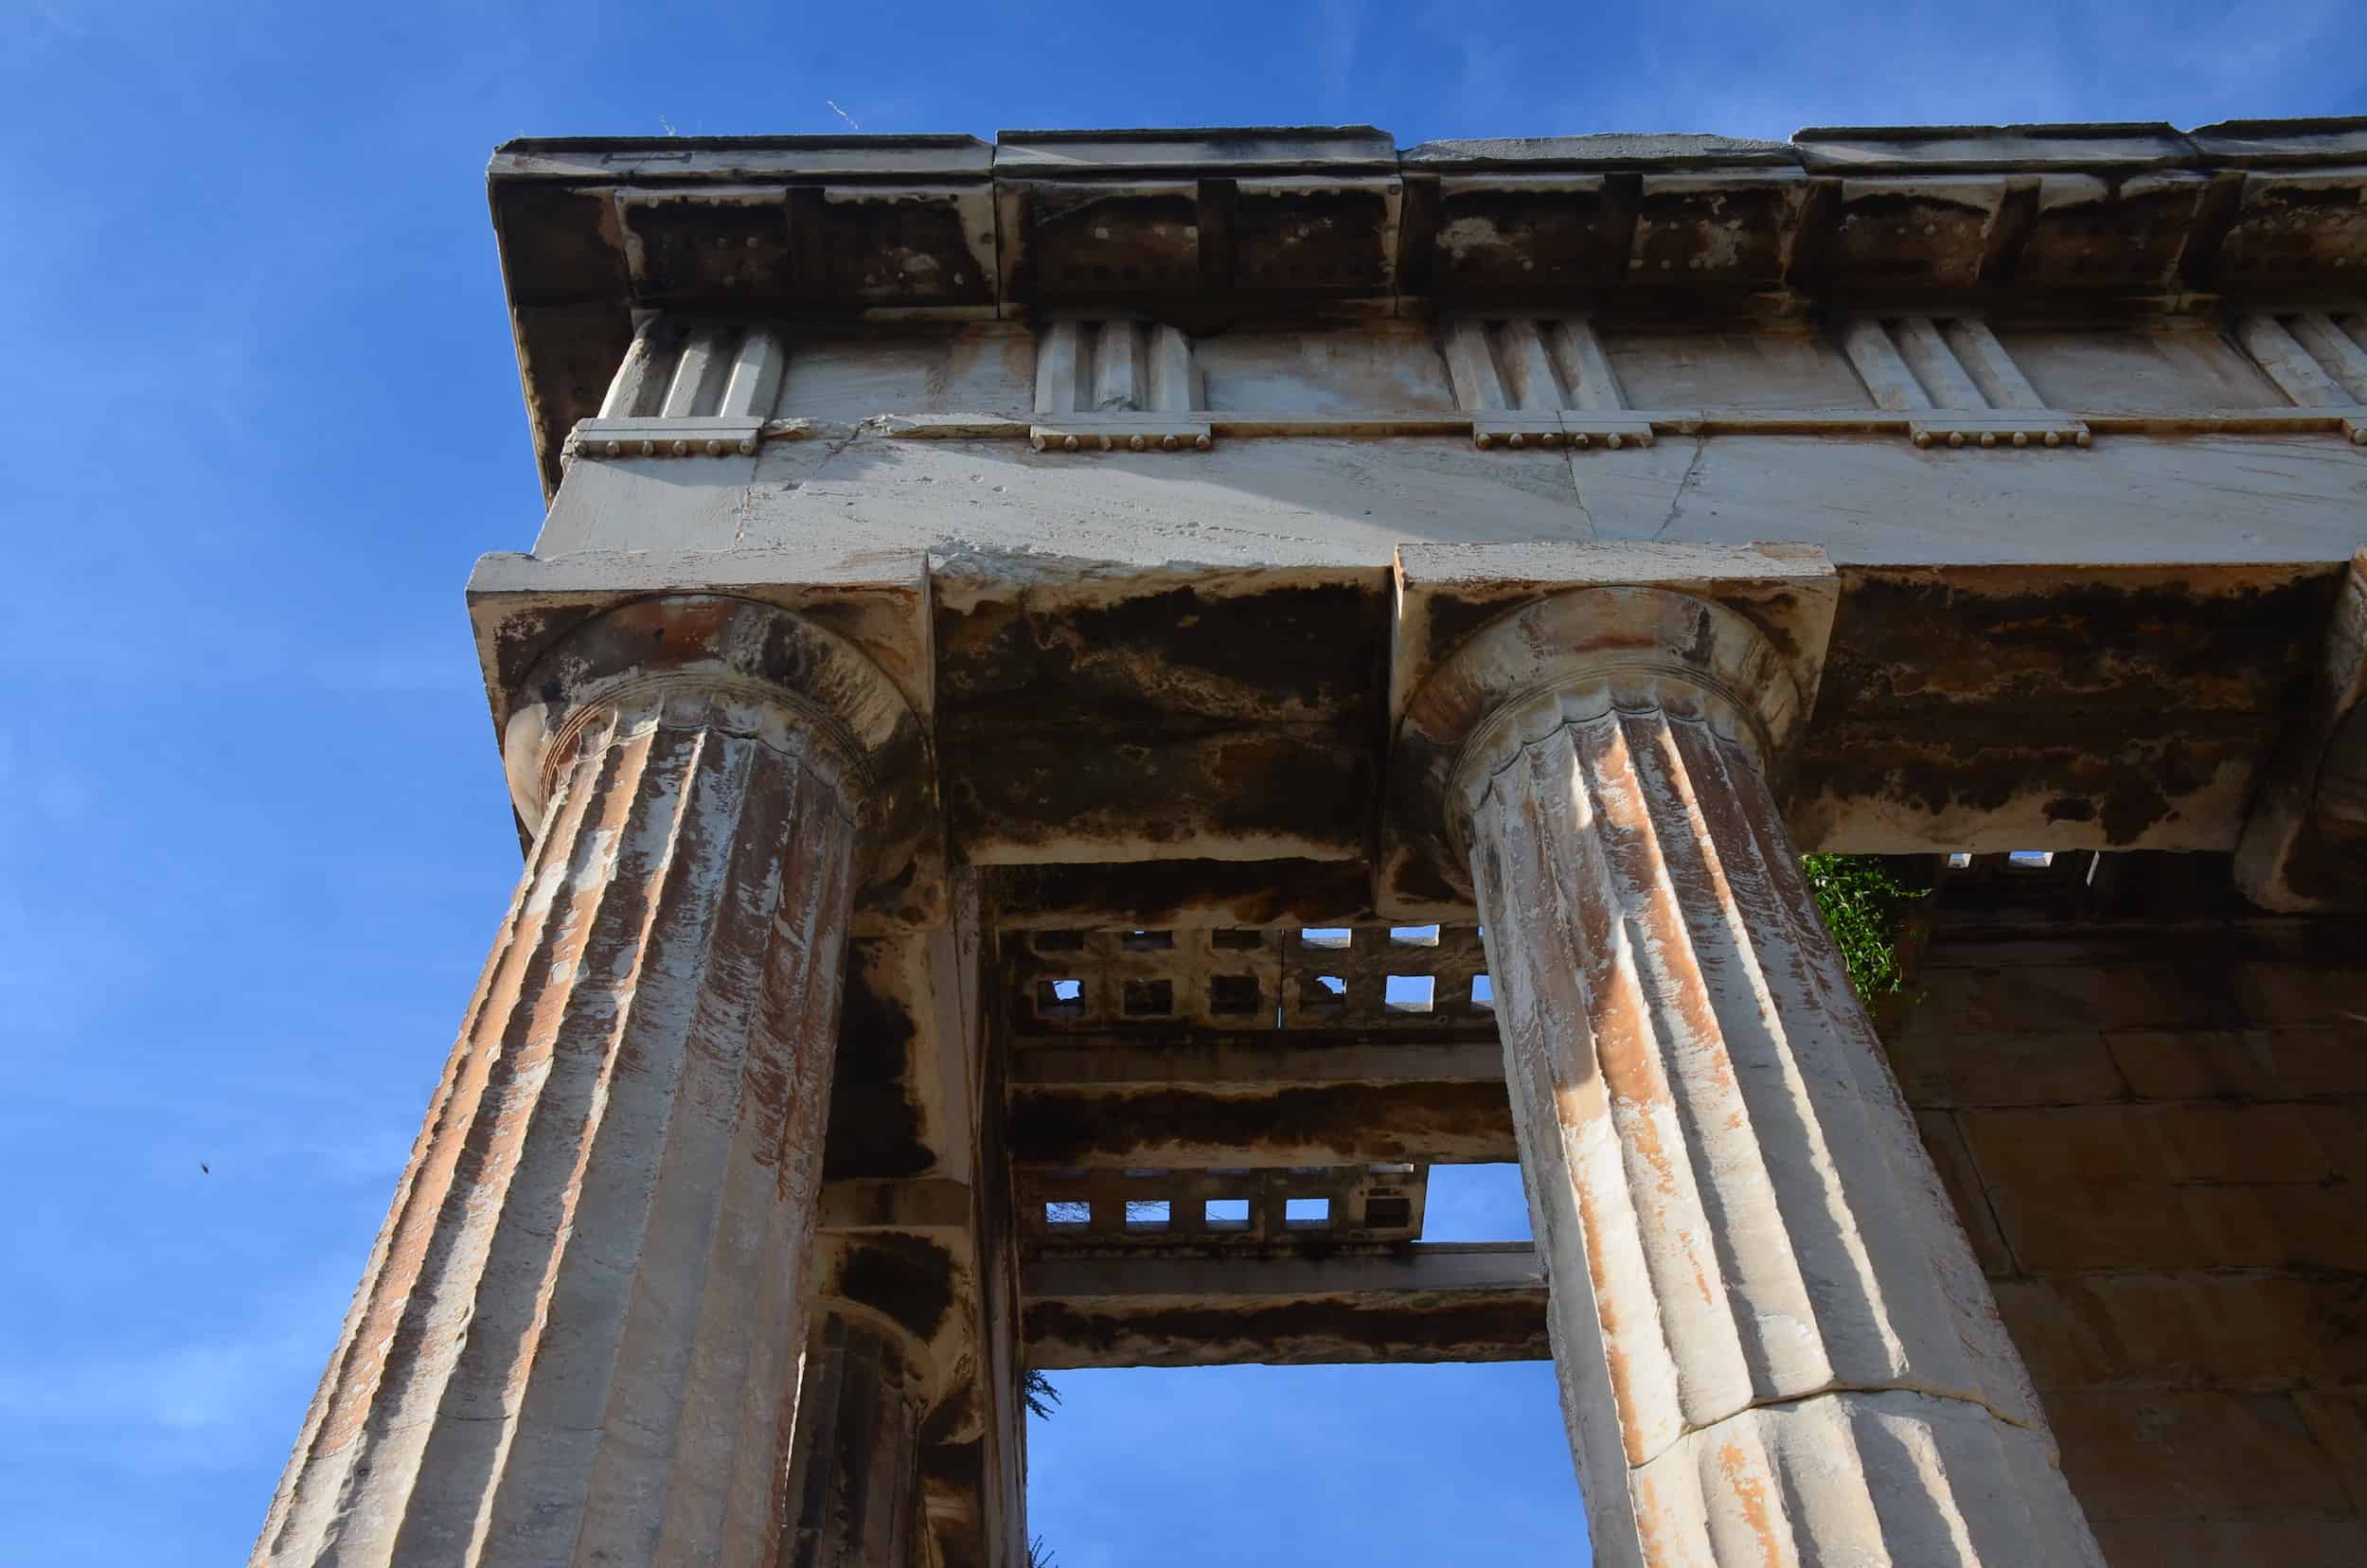 Northwest corner of the Temple of Hephaestus